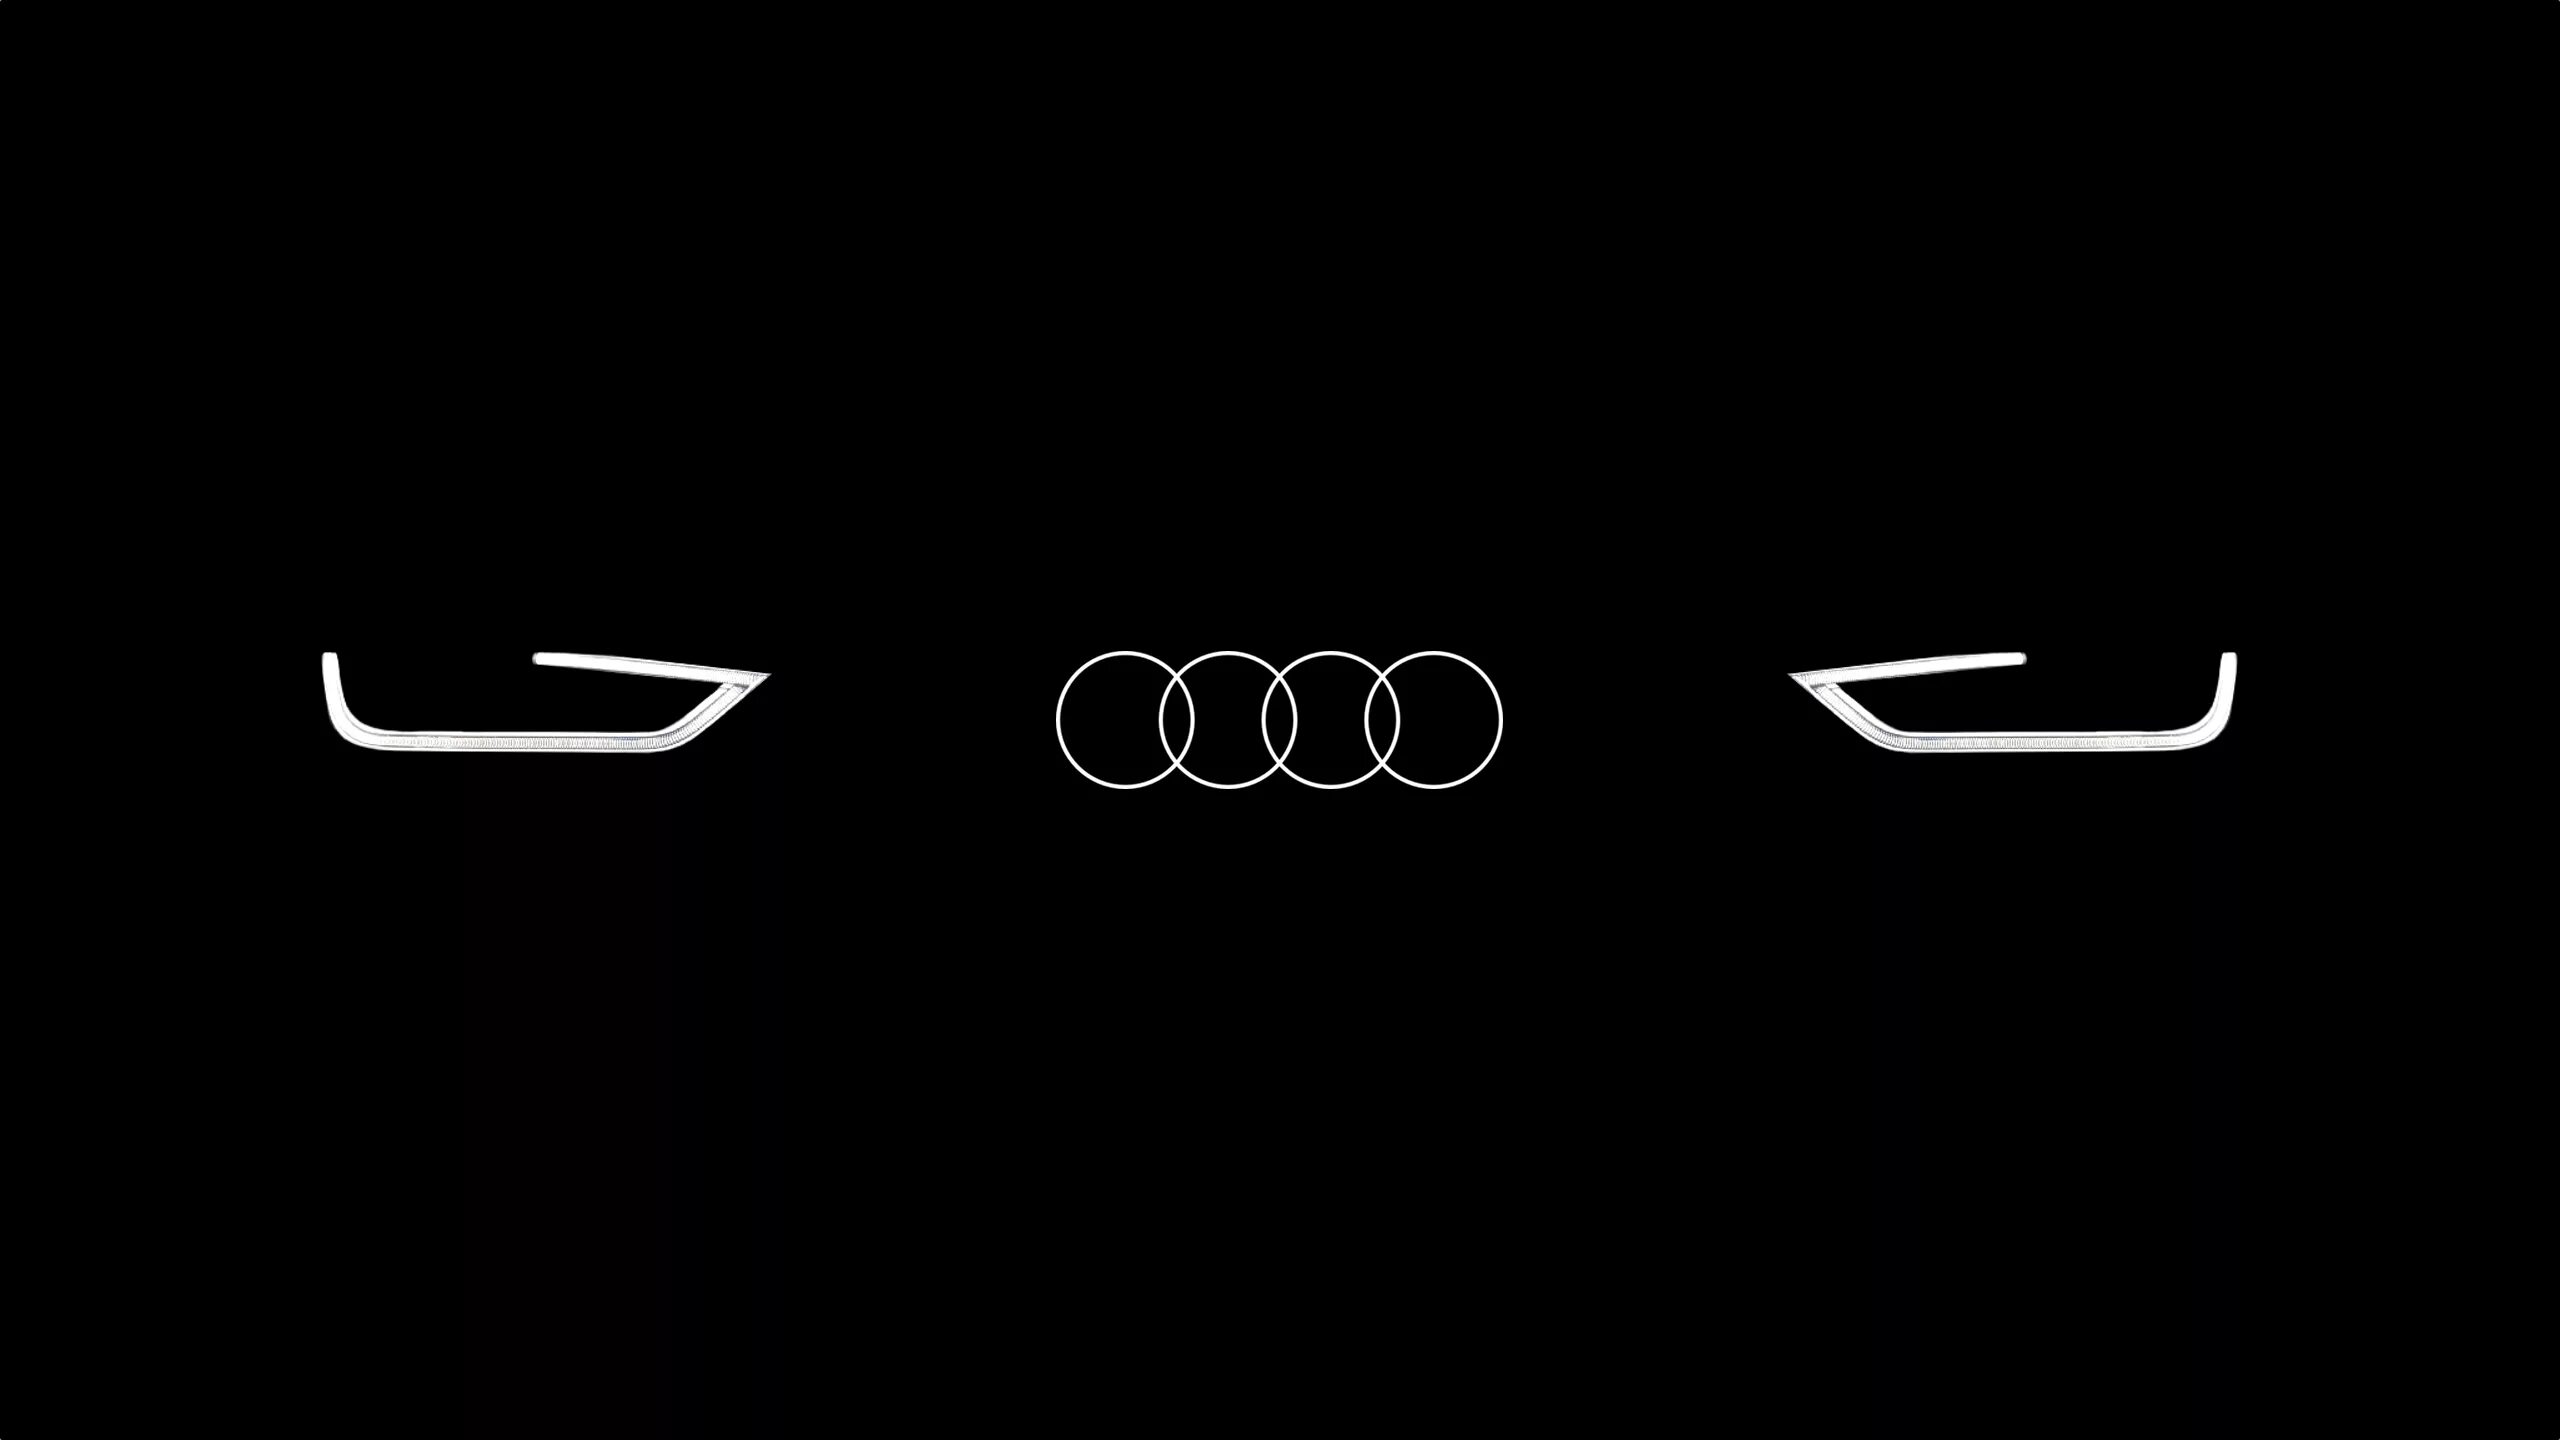 5 20 61. Audi a6 logo. Джада Файер учительница. Ауди а5 значок. Audi a4 logo.